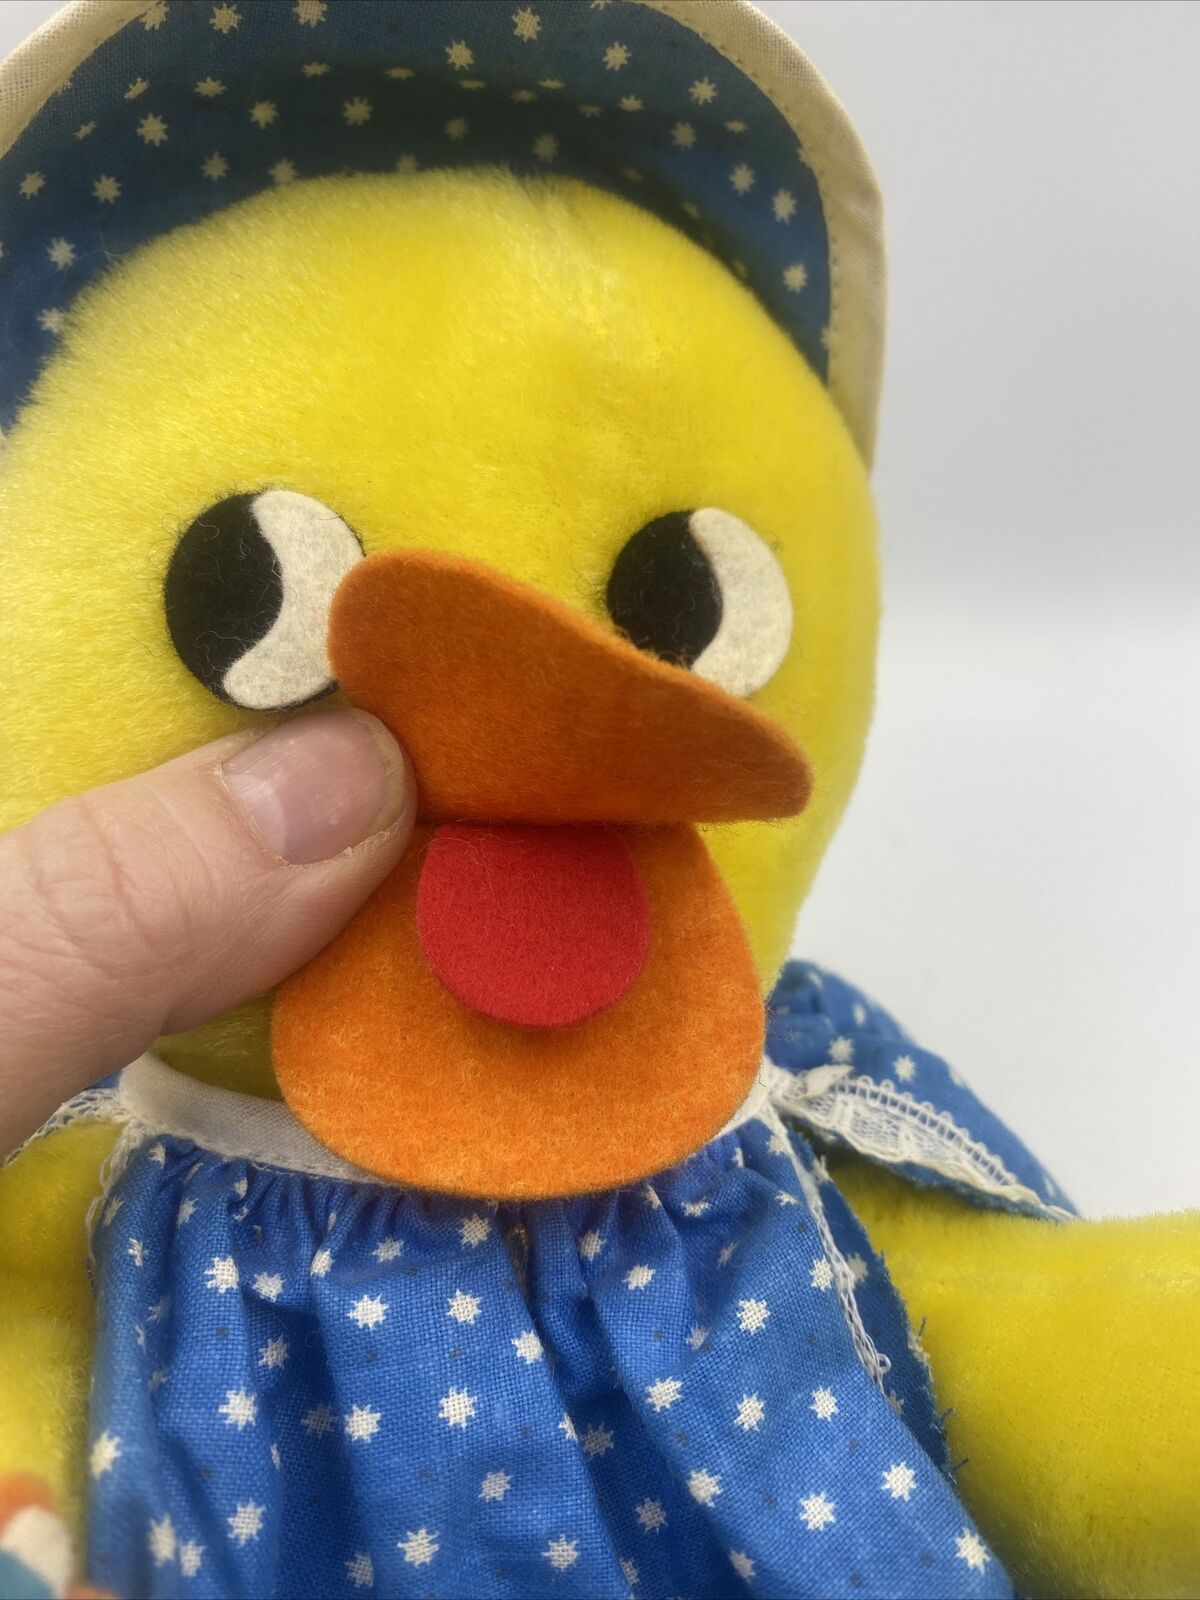 Vintage Knickerbocker Duck Yellow Orange Blue 8" Stuffed Plush Toy EUC!!!